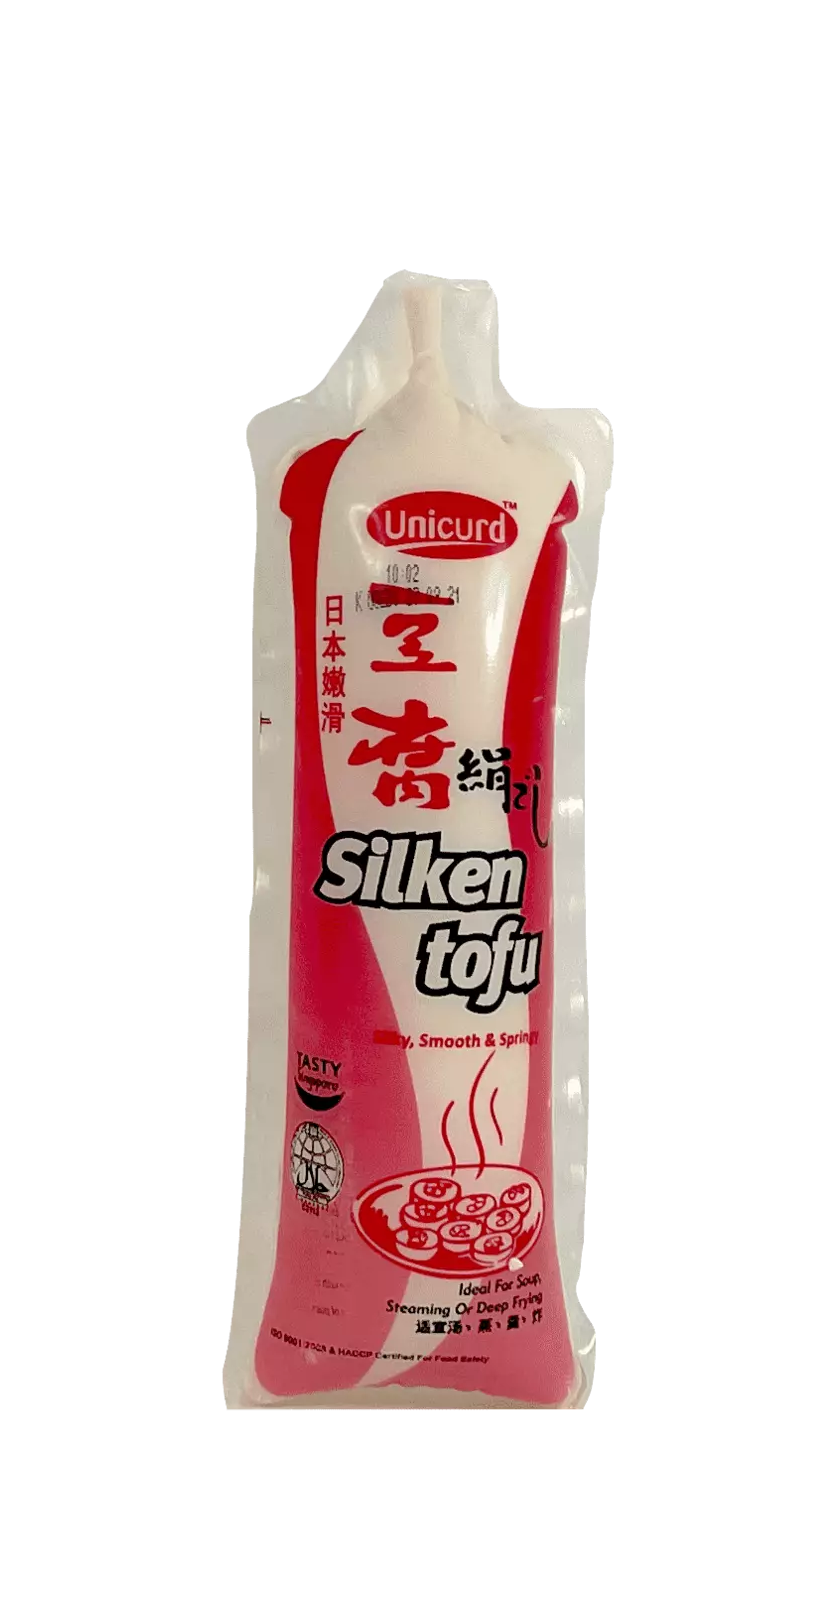 Best Before: 2023.04.03 Tofu Silken 250g Unicurd Singapore